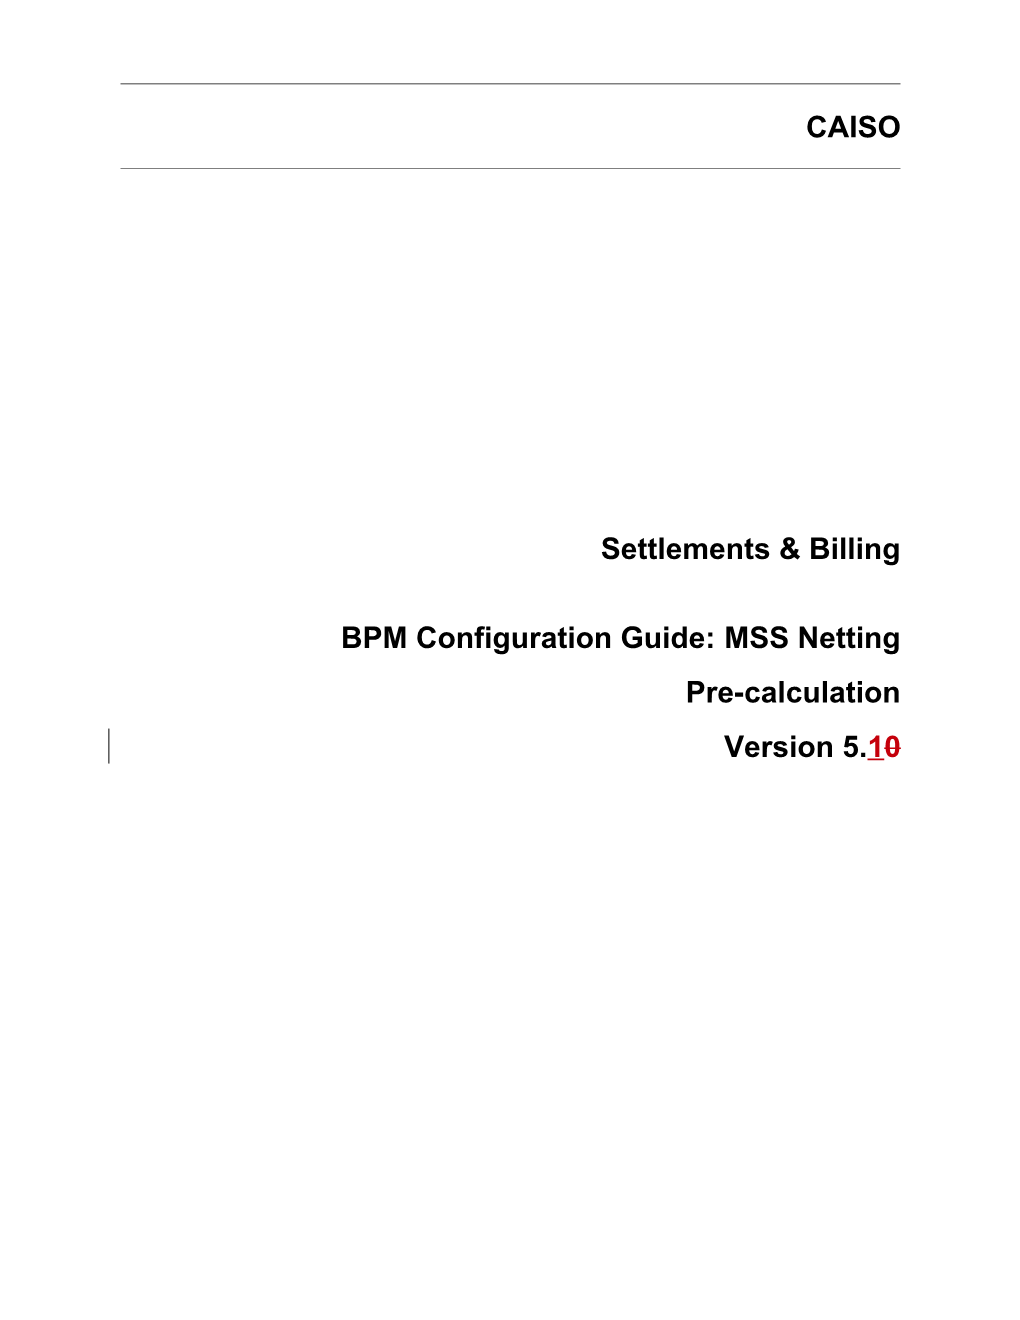 BPM Configuration Guide:MSS Netting